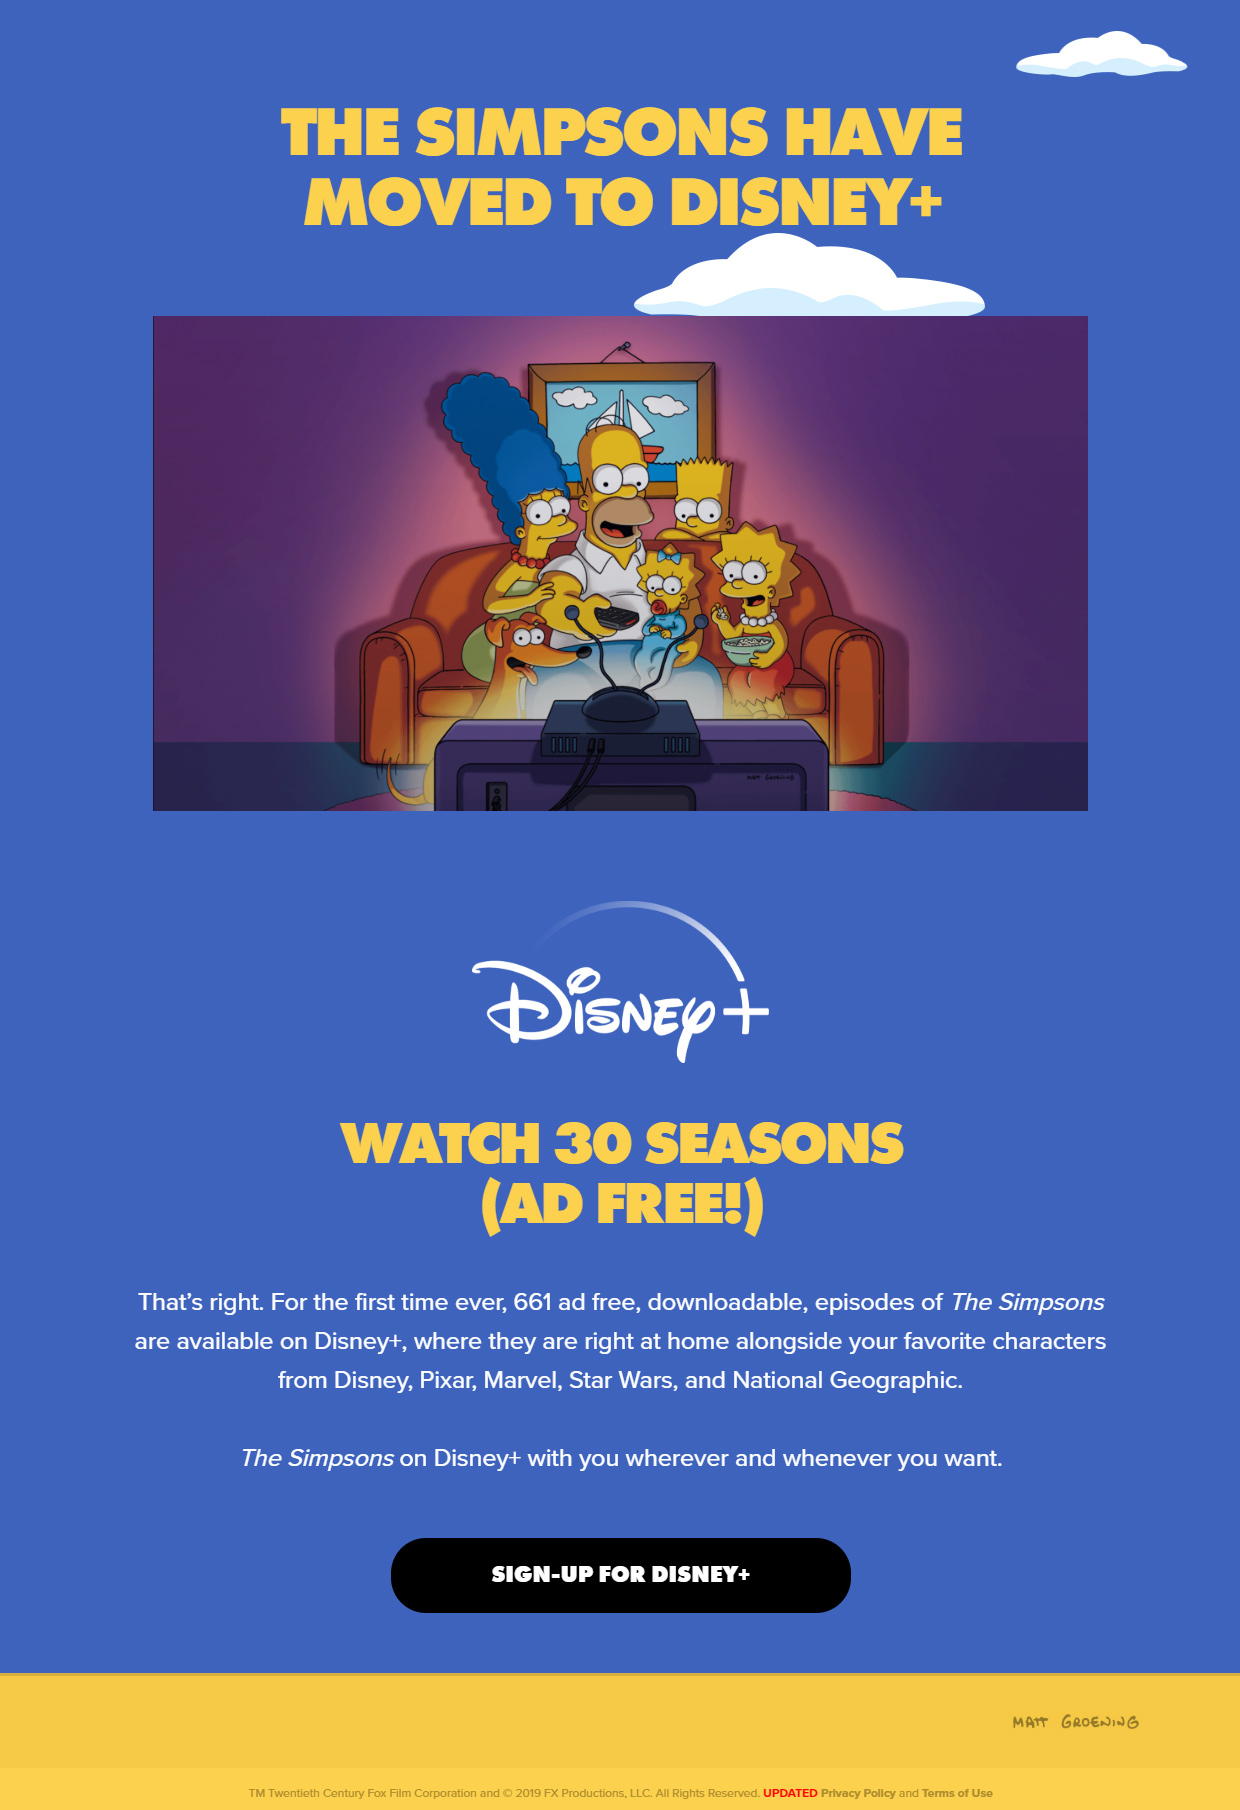 The Simpsons website in 2020